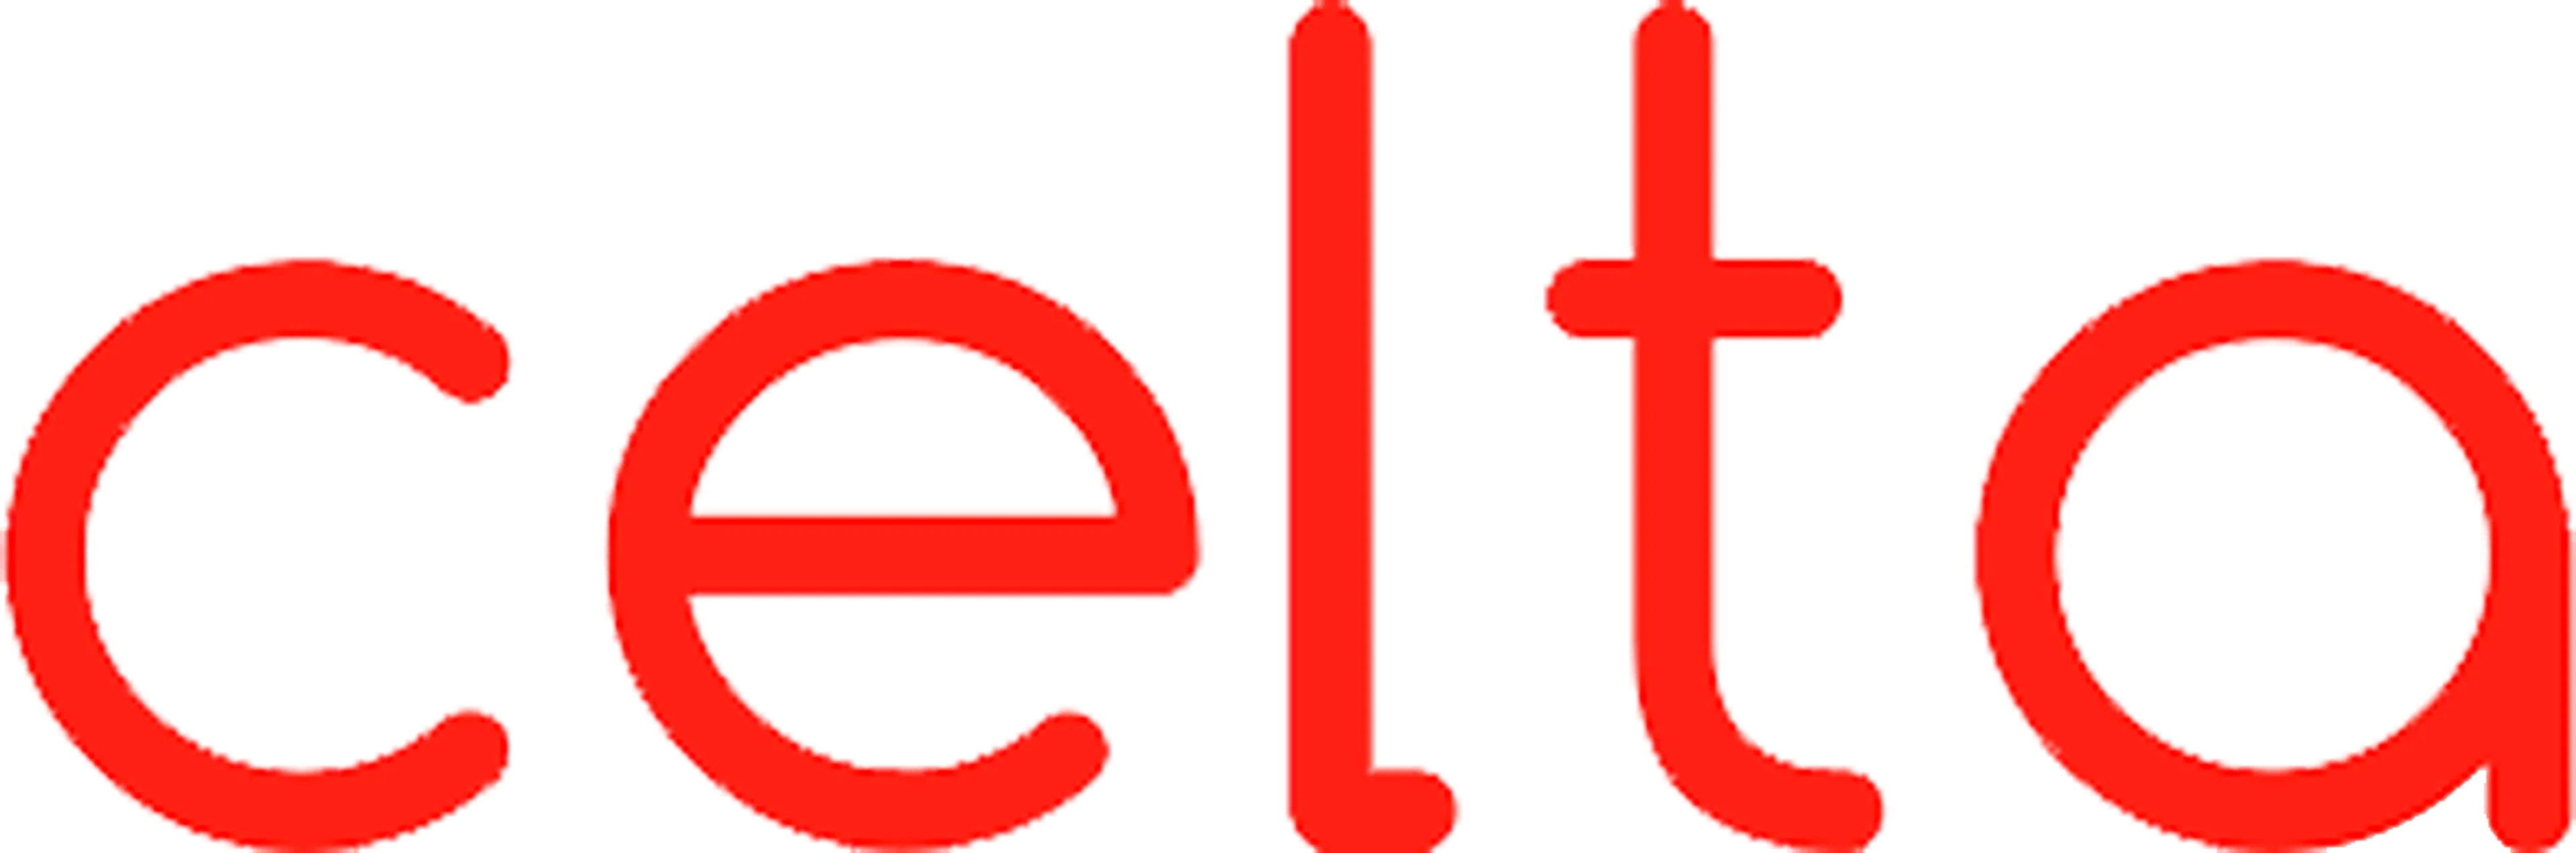 COLCHONES CELTA logo